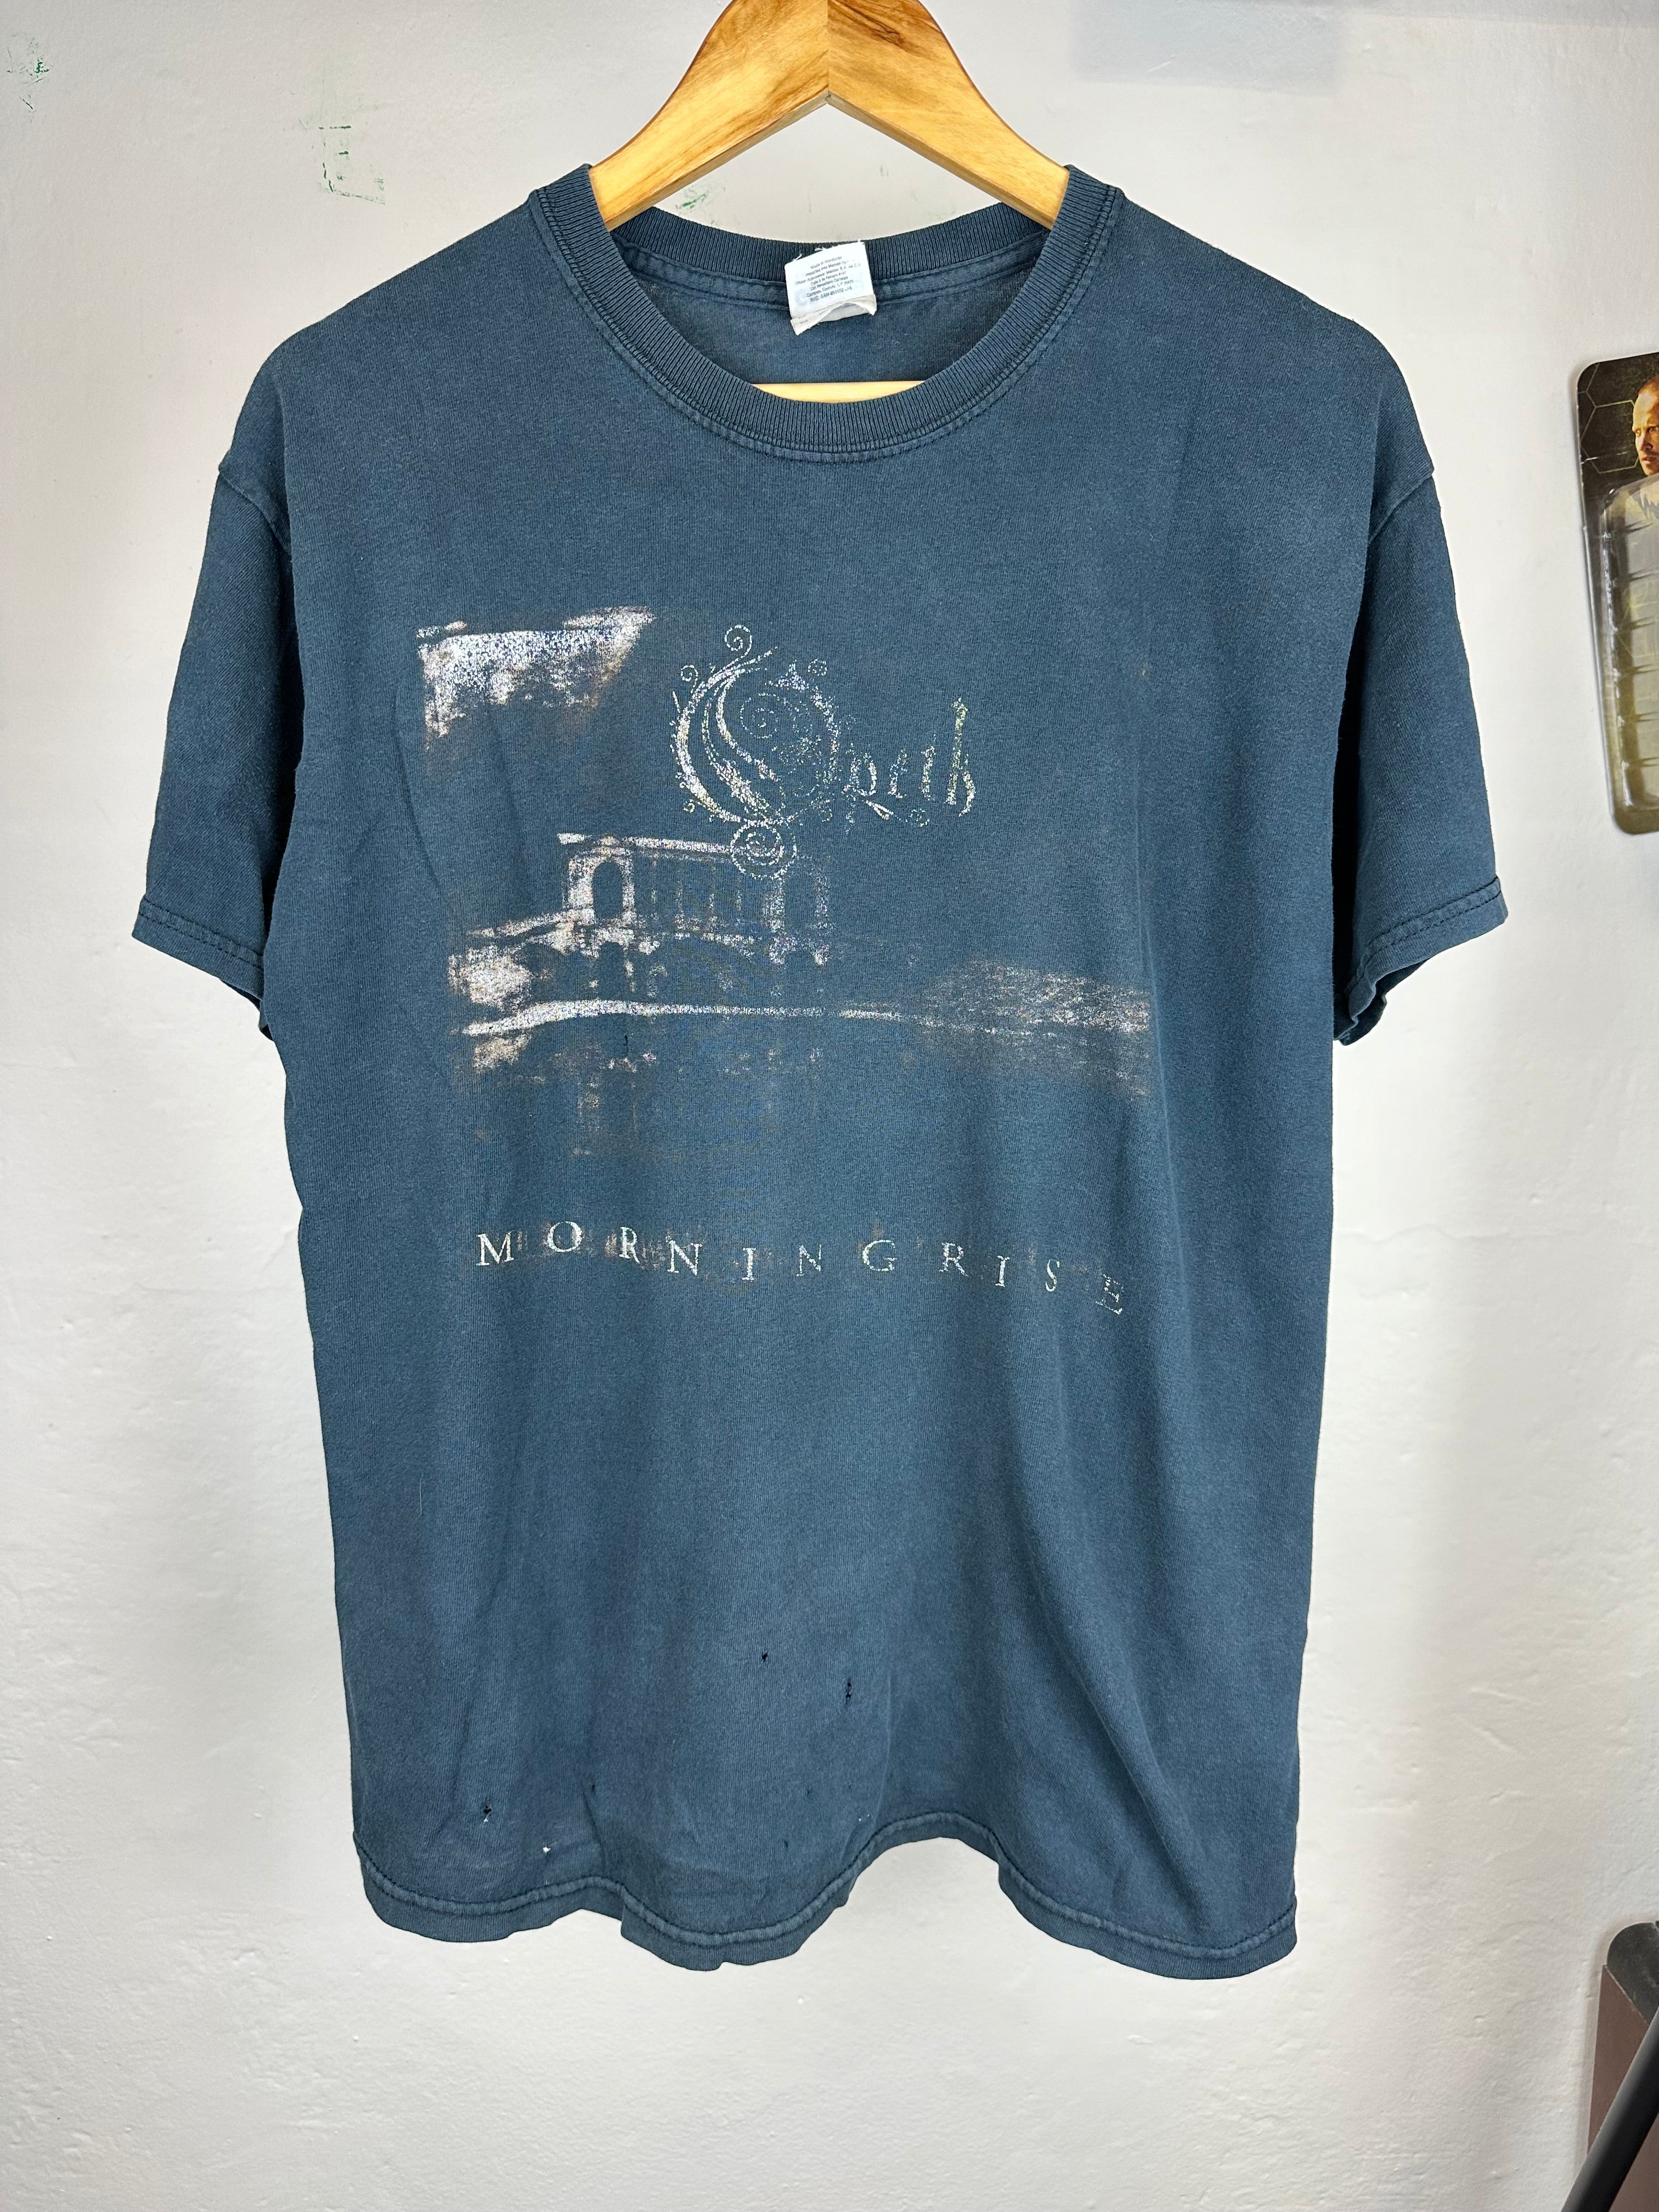 Vintage Opeth “Morningrise” t-shirt - size M